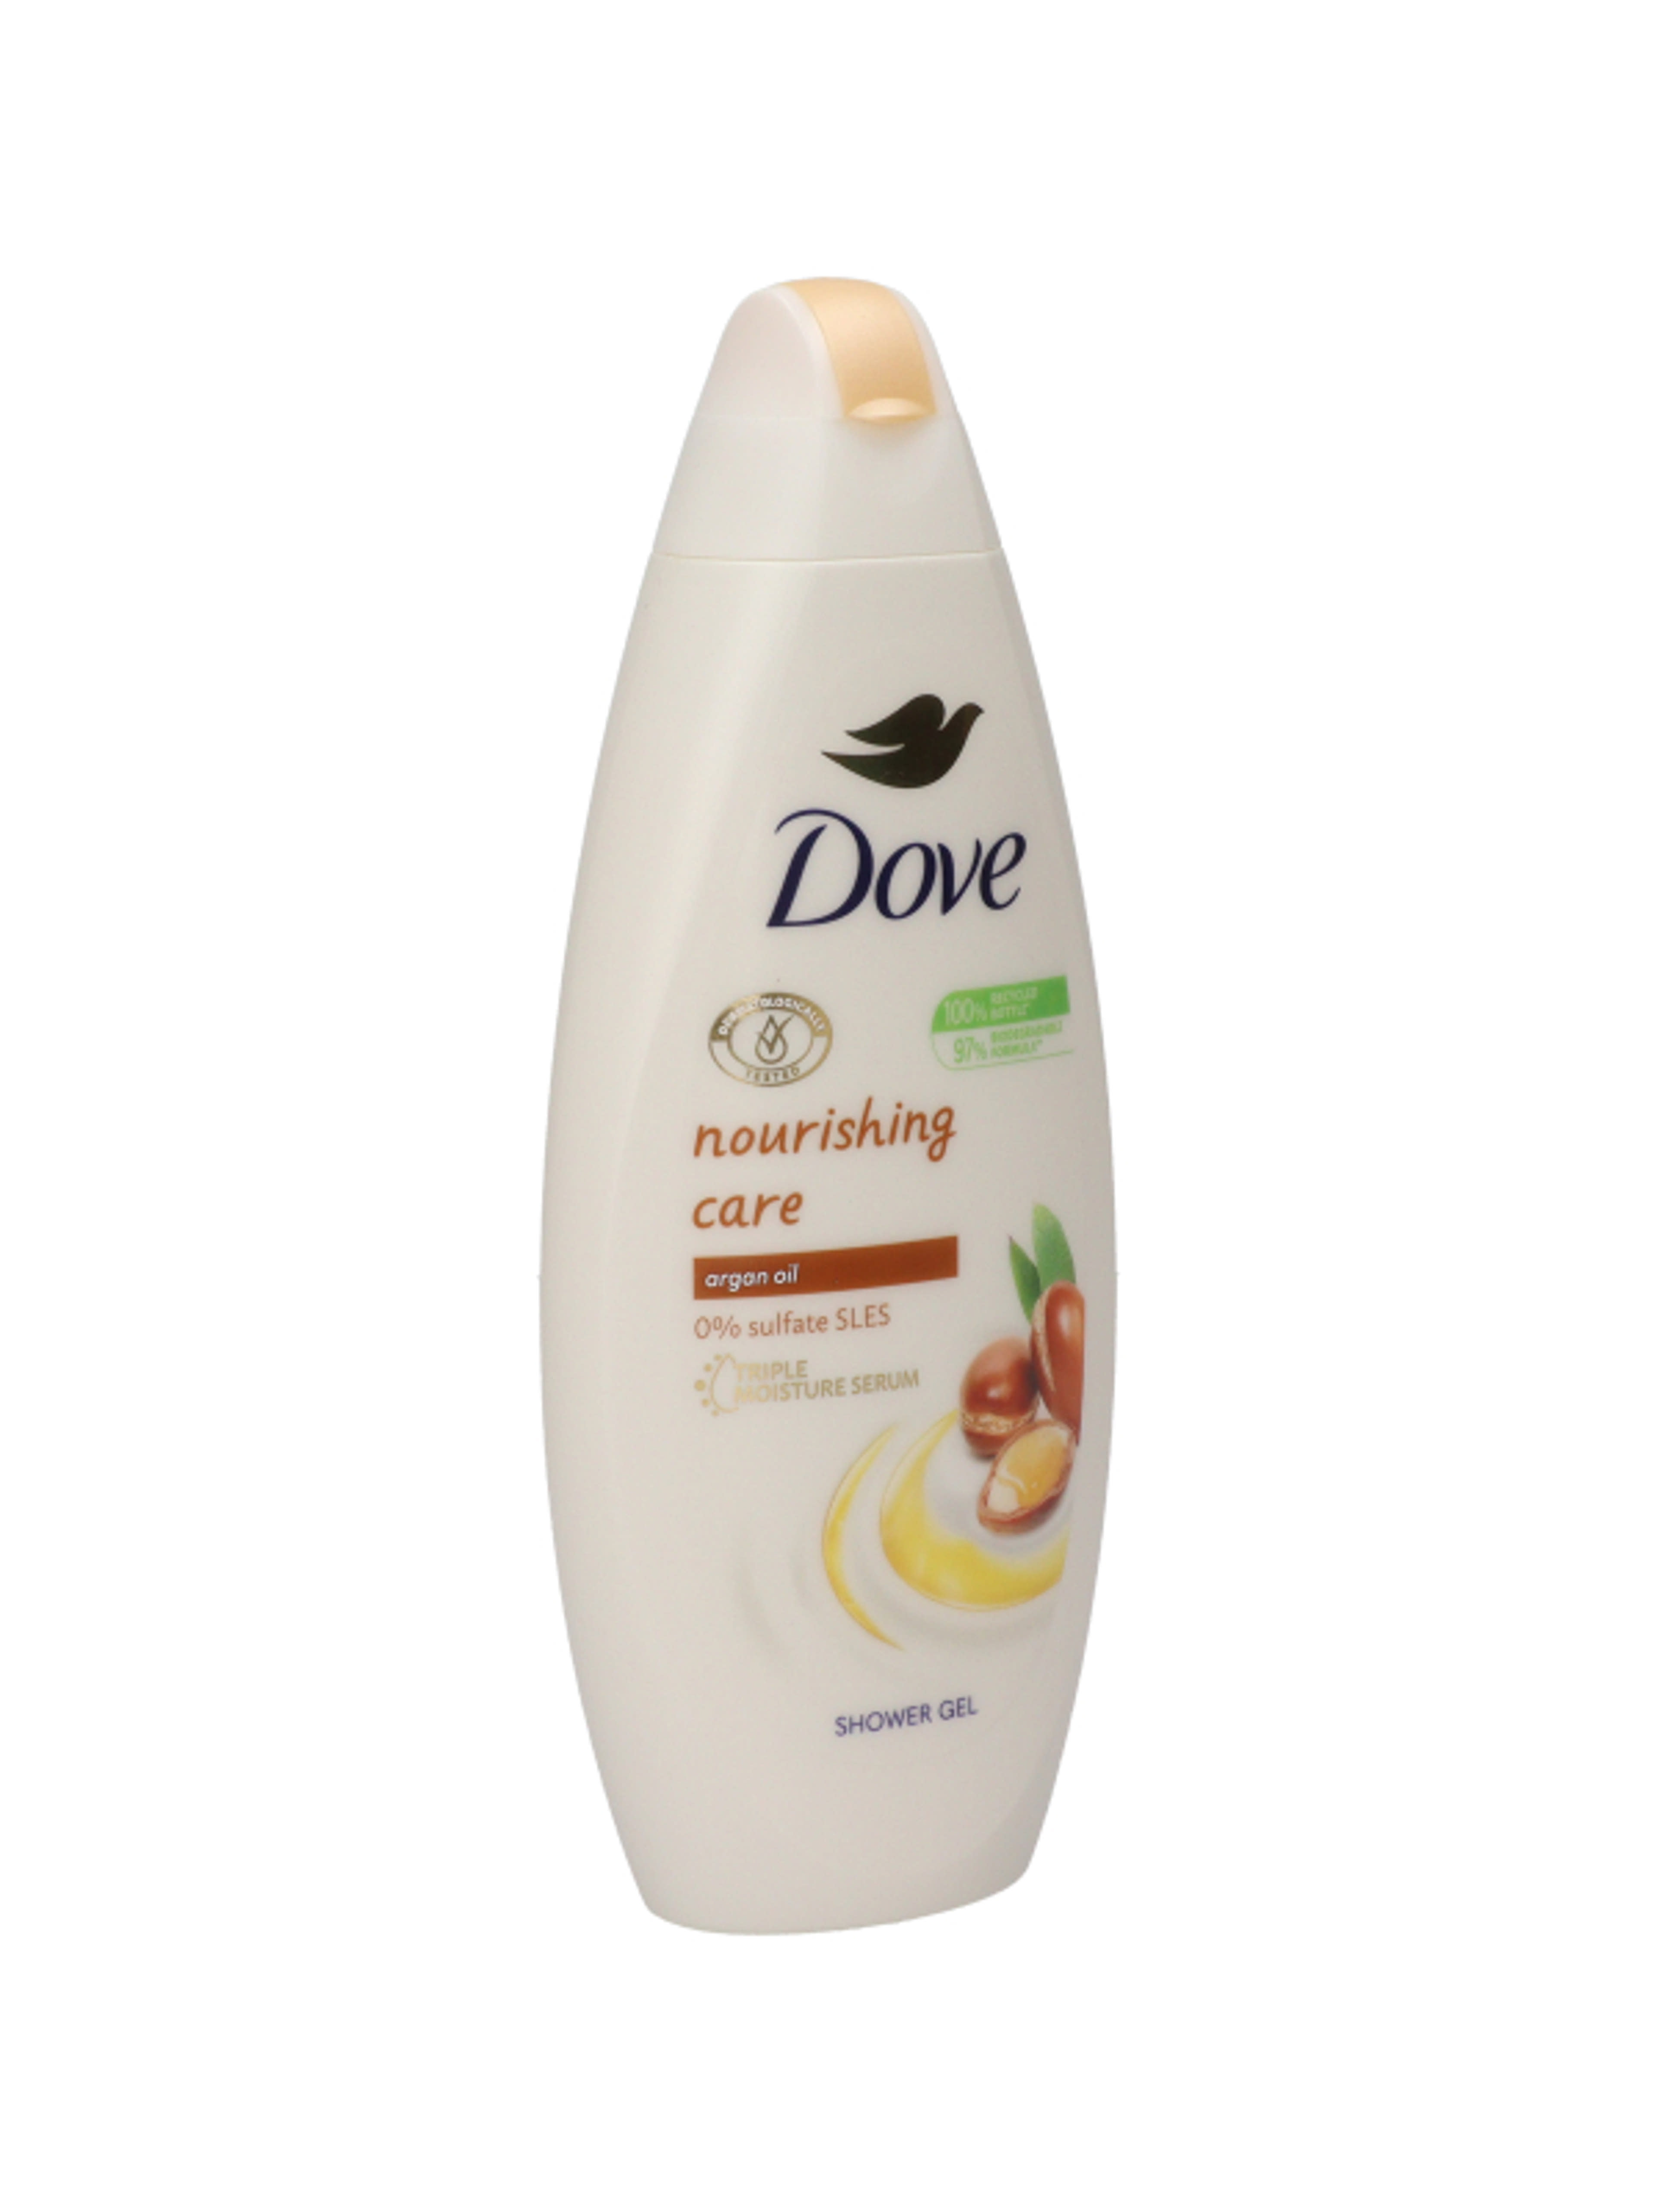 Dove Nourishing Care & Oil krémtusfürdő marokkói argán olajjal - 250 ml-6